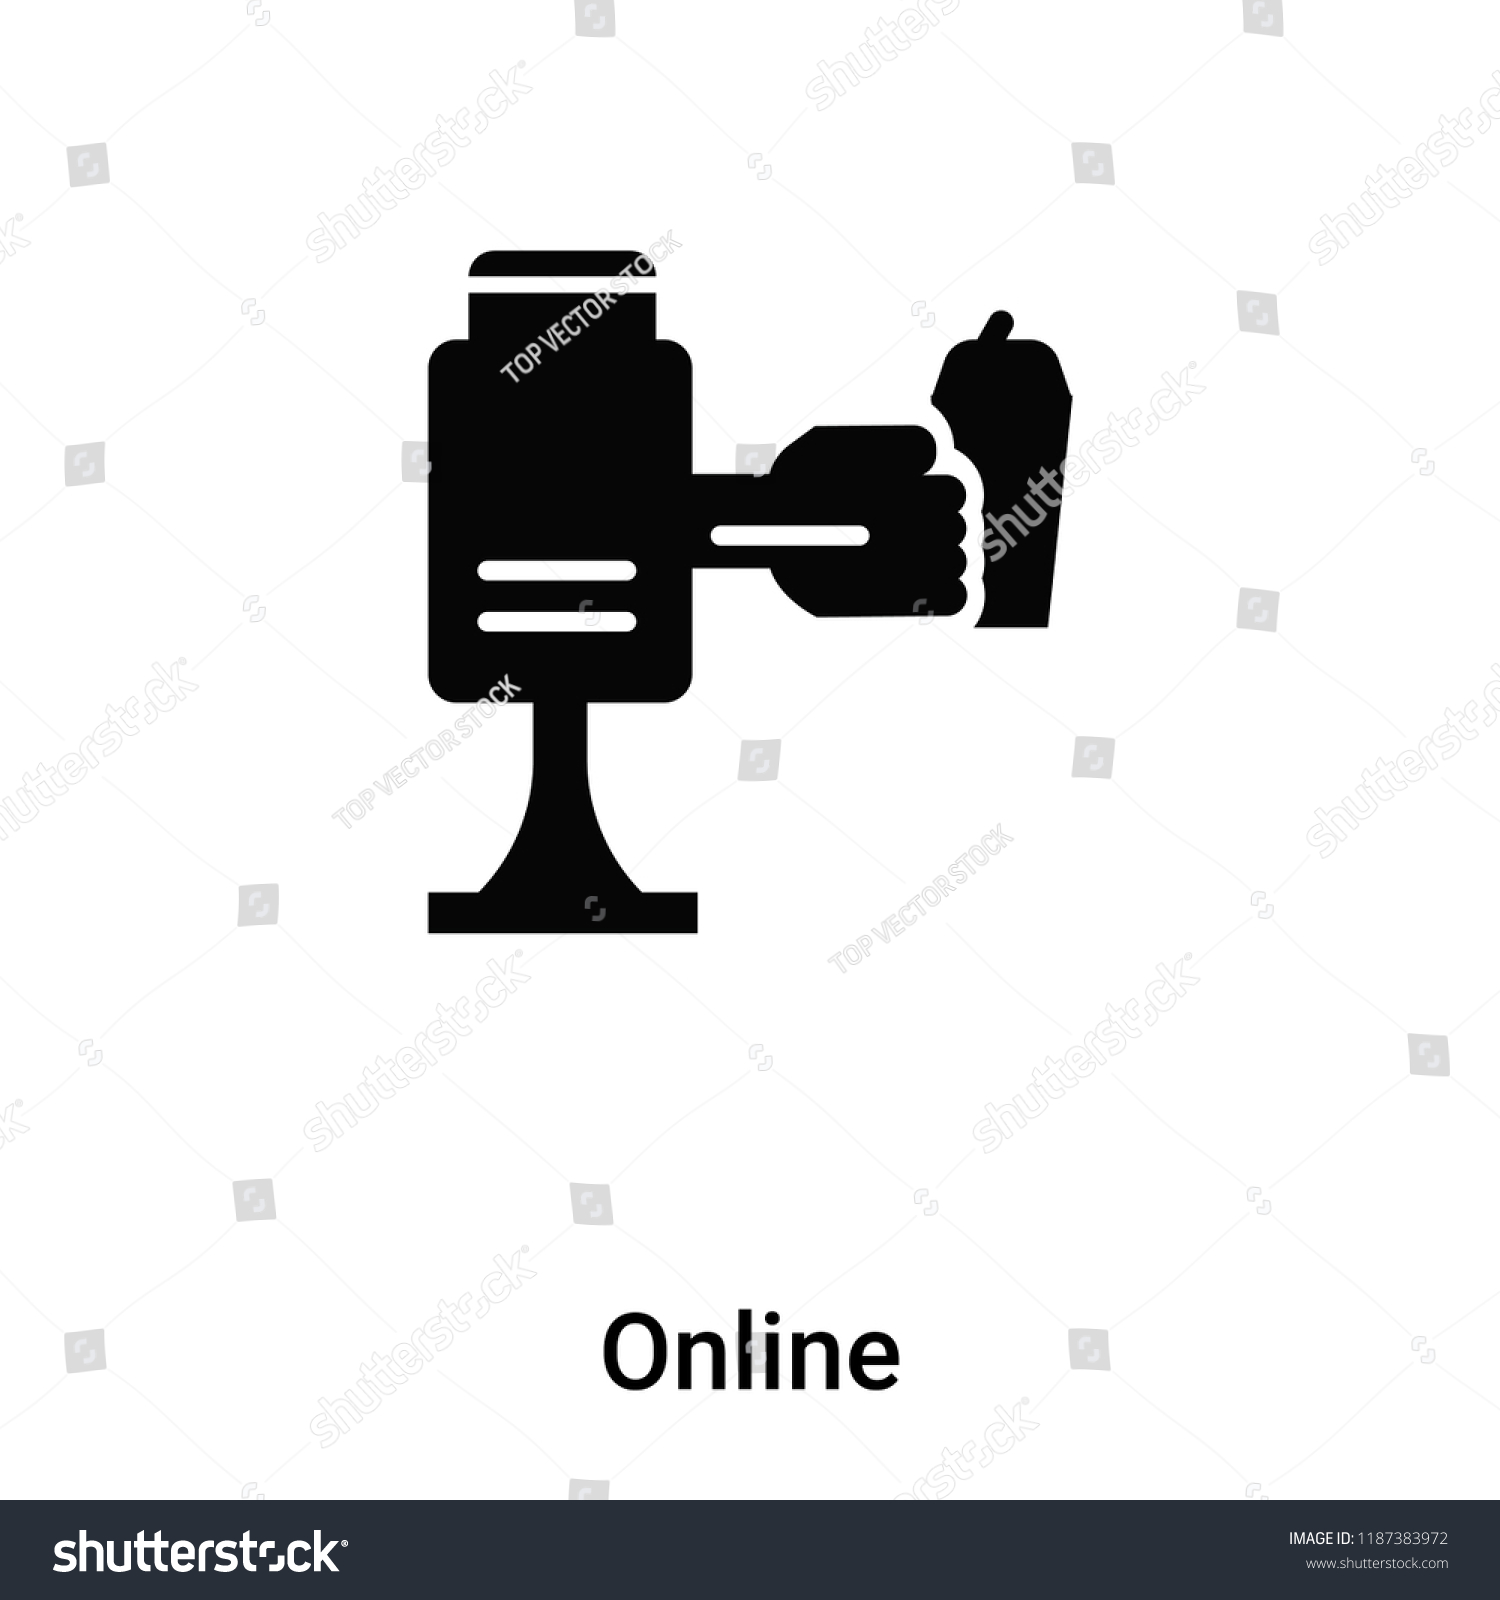 SVG of Online icon vector isolated on white background, logo concept of Online sign on transparent background, filled black symbol svg